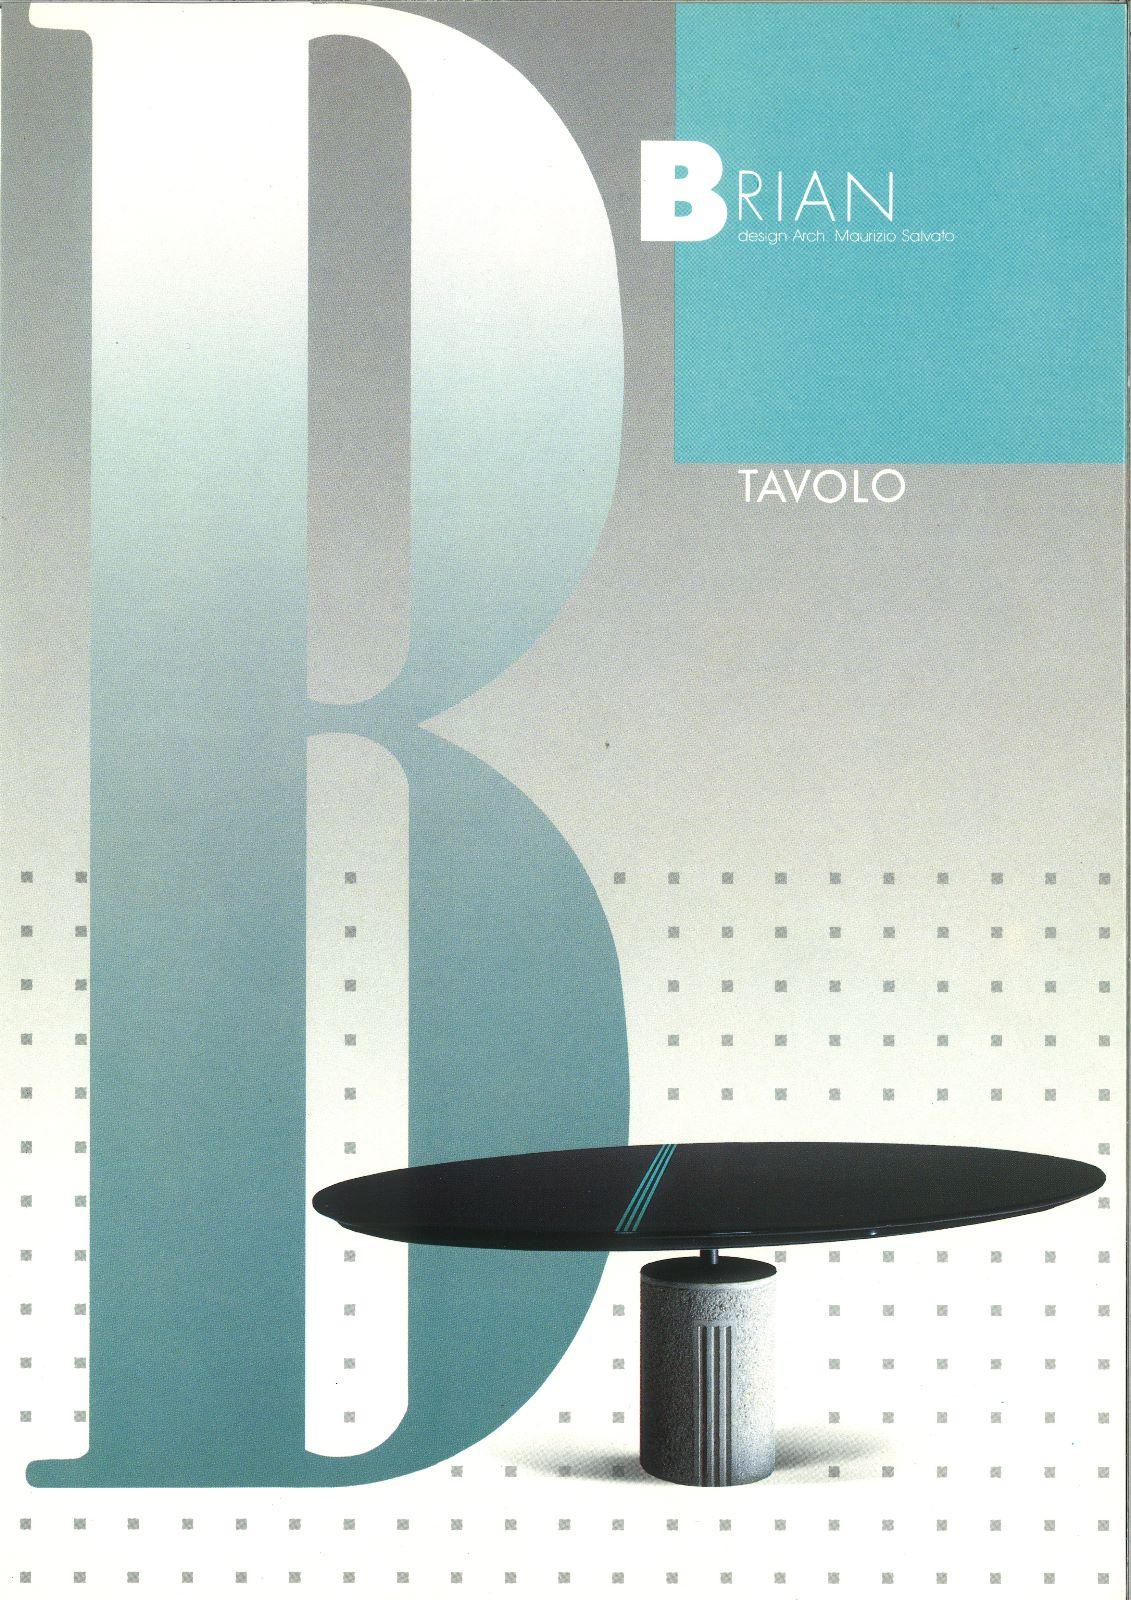 Maurizio Salvato Oval table mod Brian with sculptural stone foot, Saporiti 1970s For Sale 7